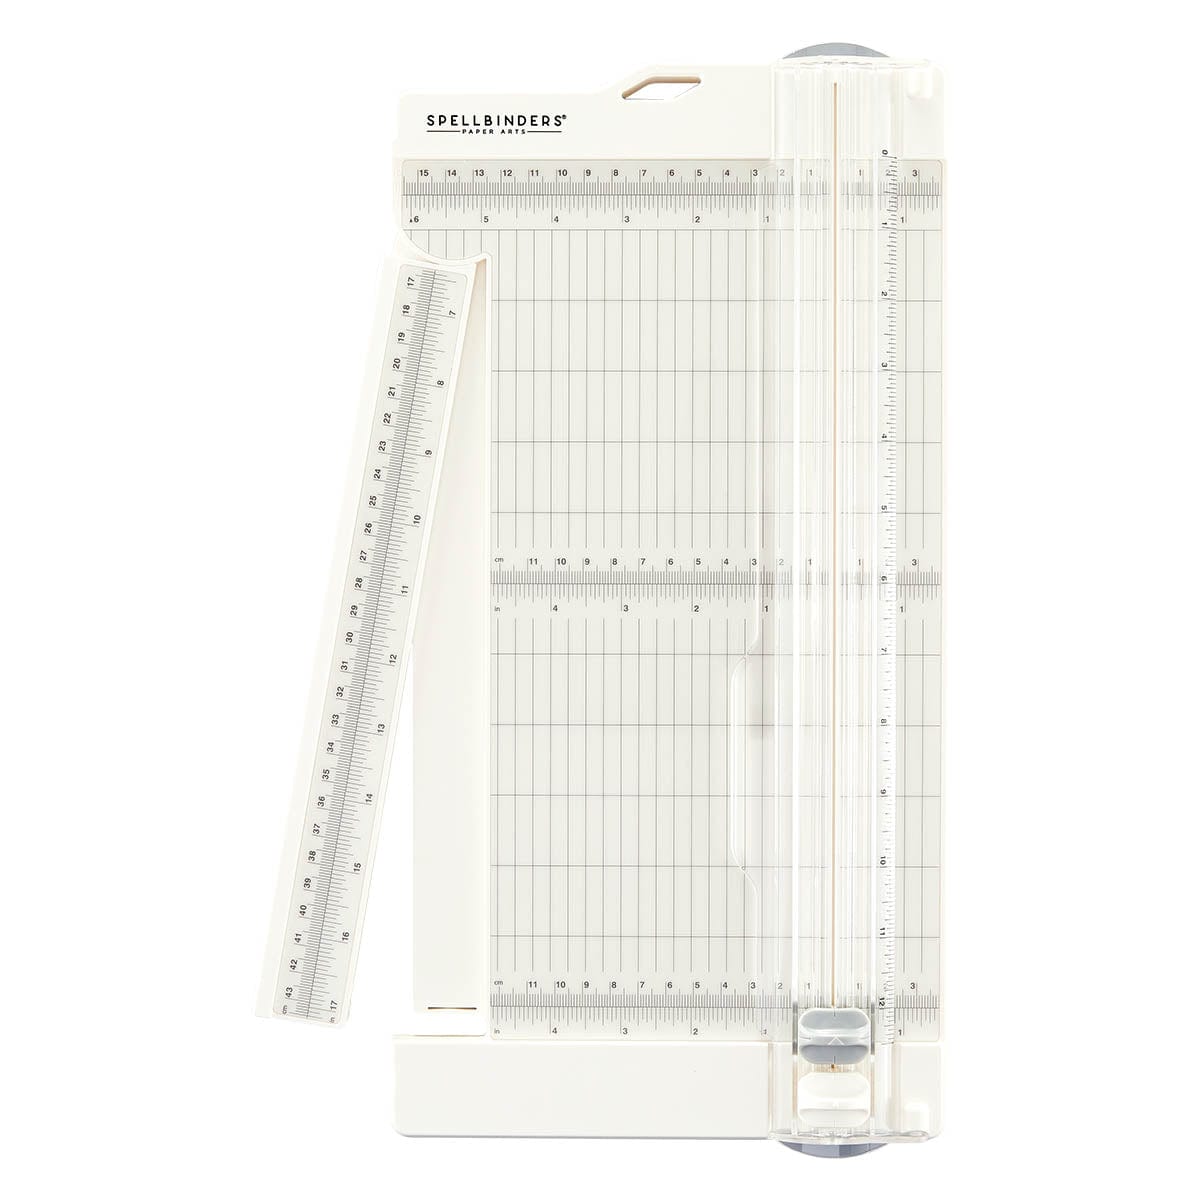 Measurements for Beginners: Ruler, Score Board, Paper Trimmer 